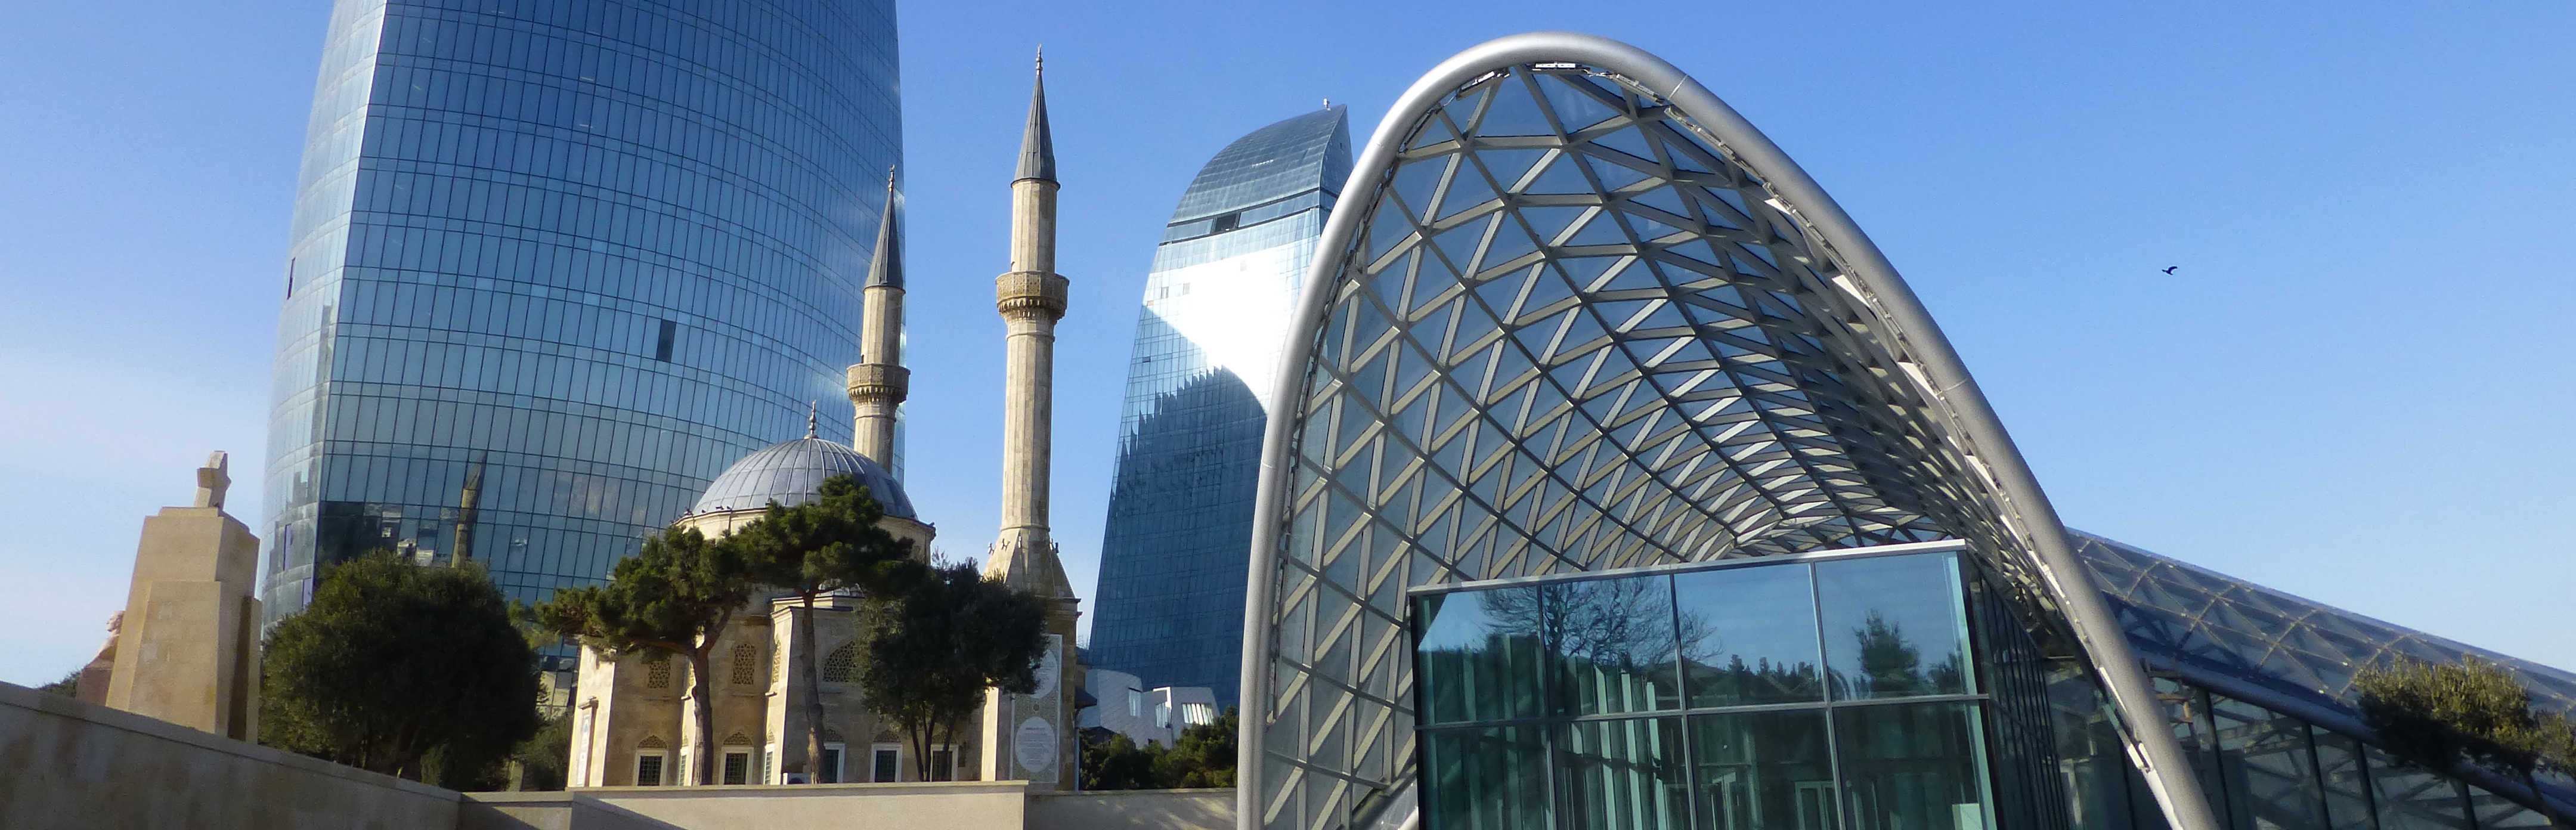 Funicular - Baku (Aserbaidjan) - Bergstation - Artuum | Europroject | Hoffelner